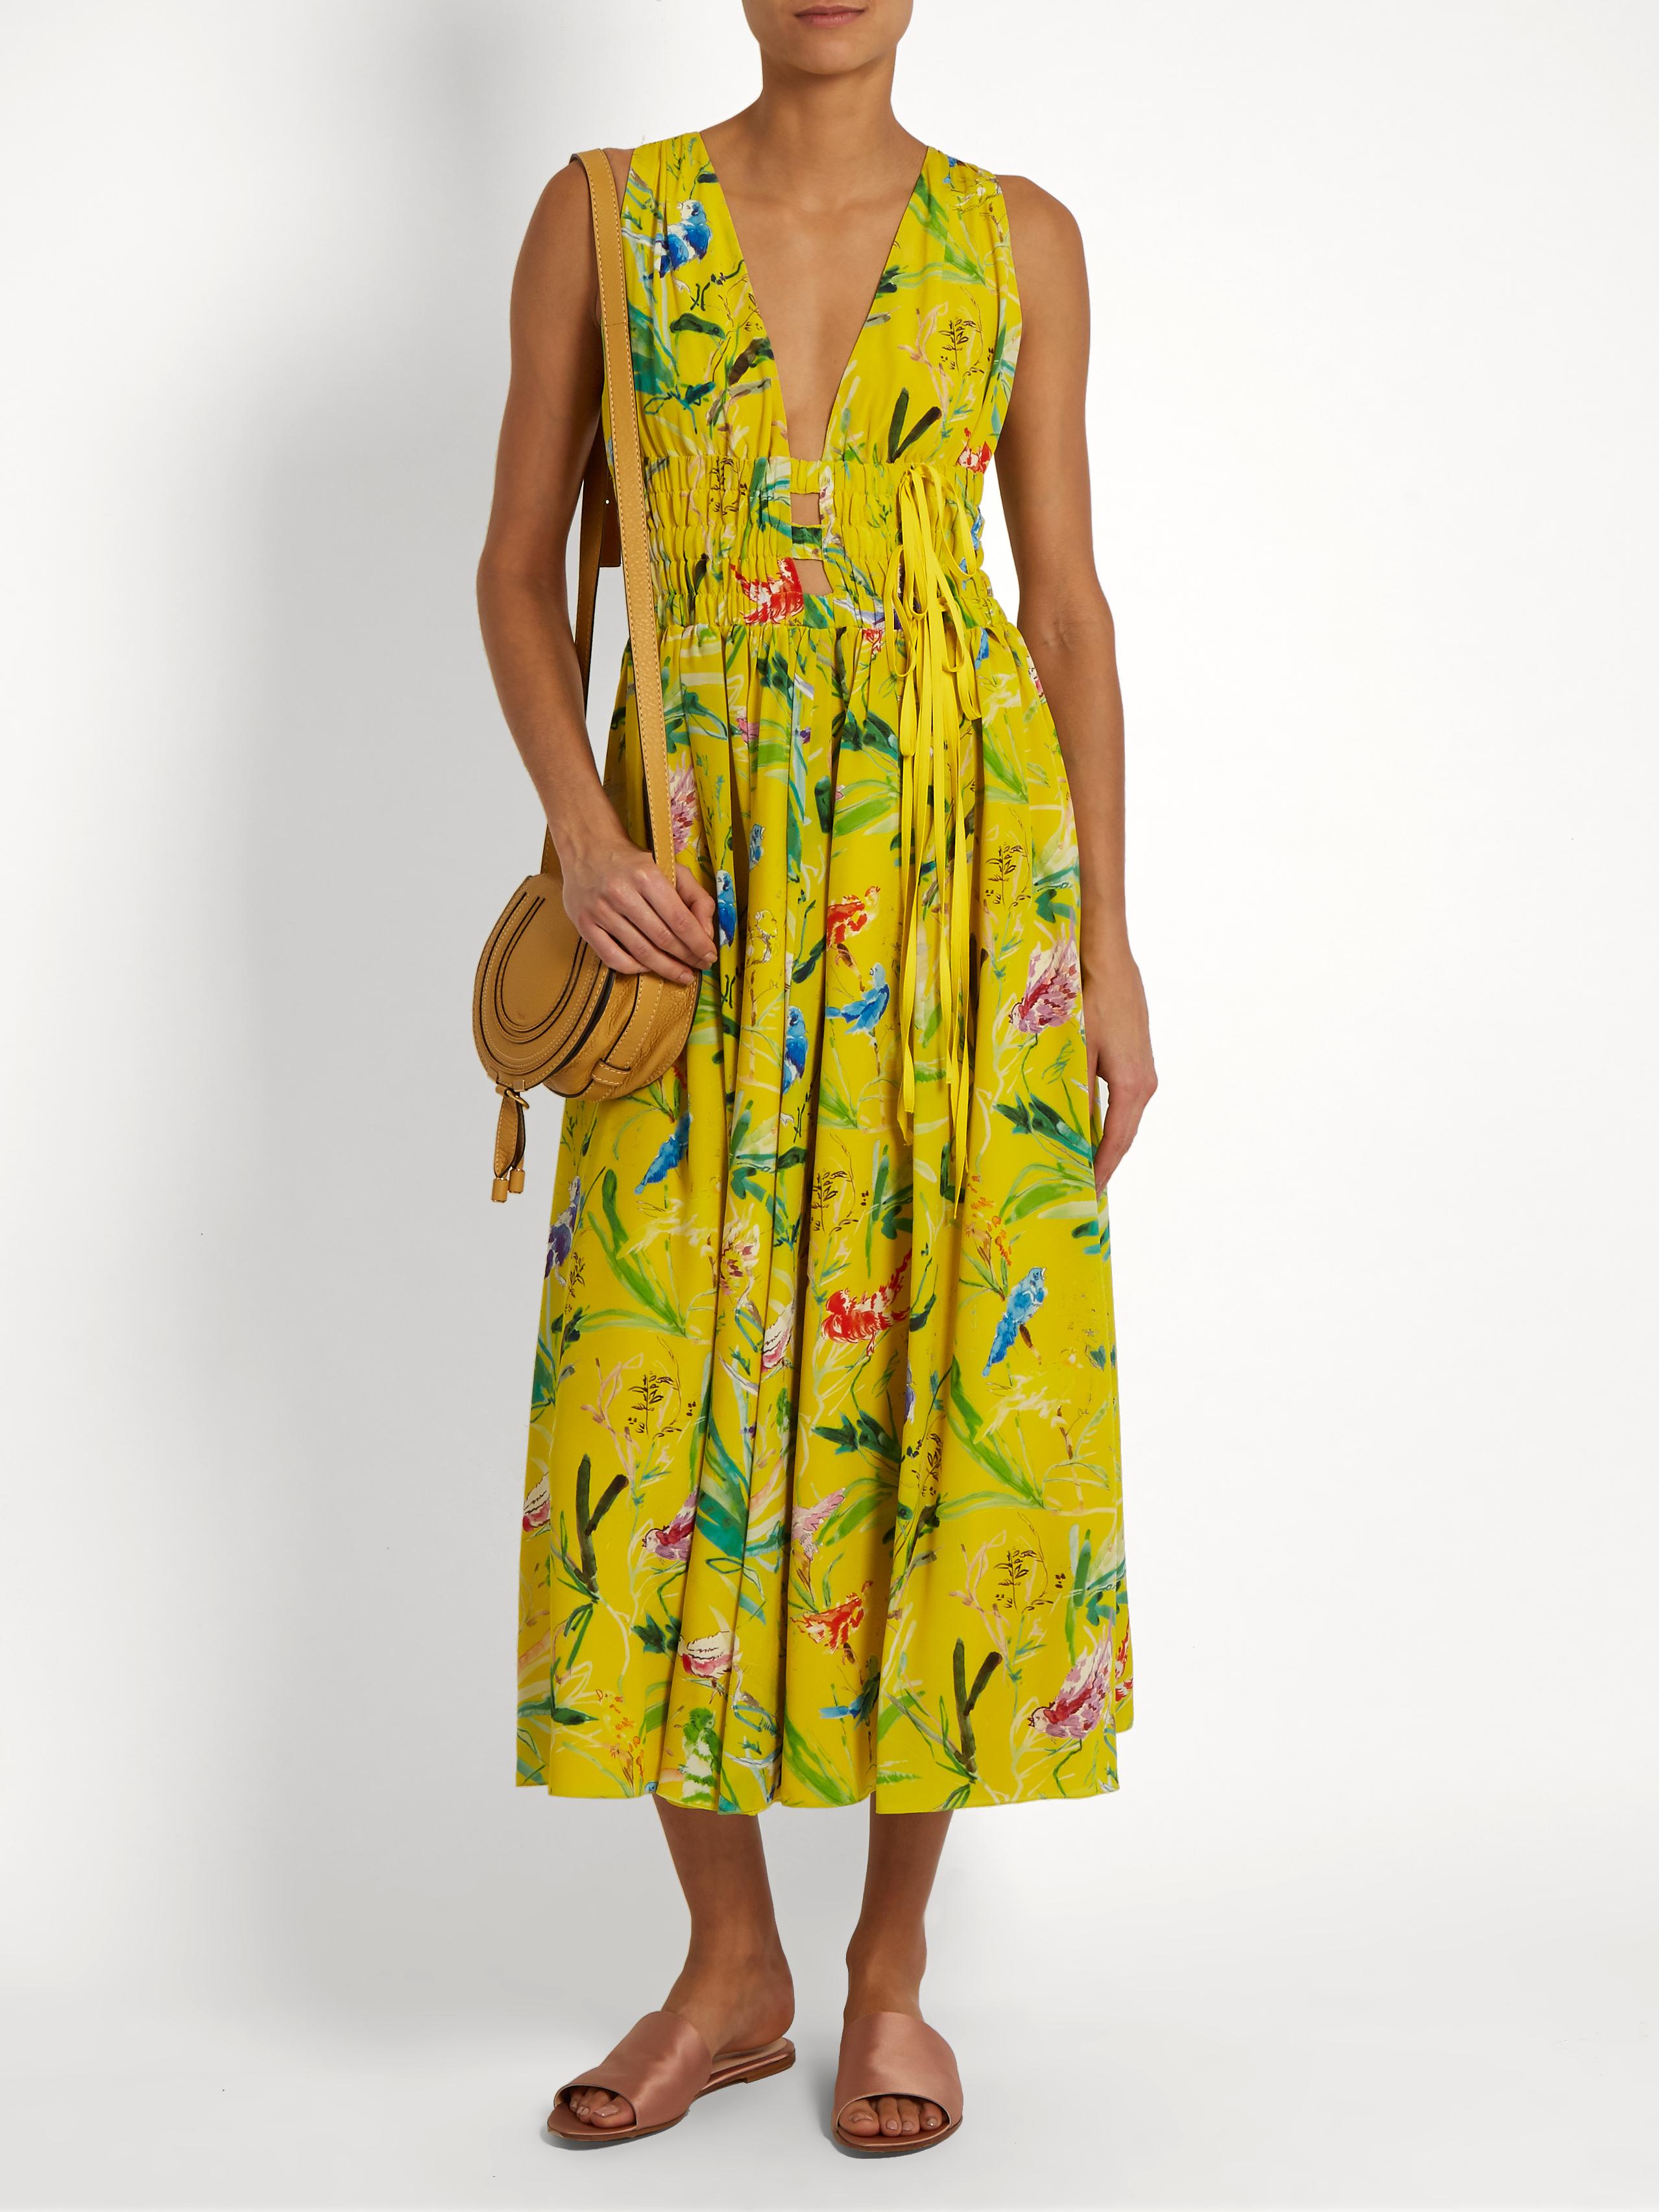 Lyst - N°21 Bird-print Gathered Silk-crepe Dress in Yellow